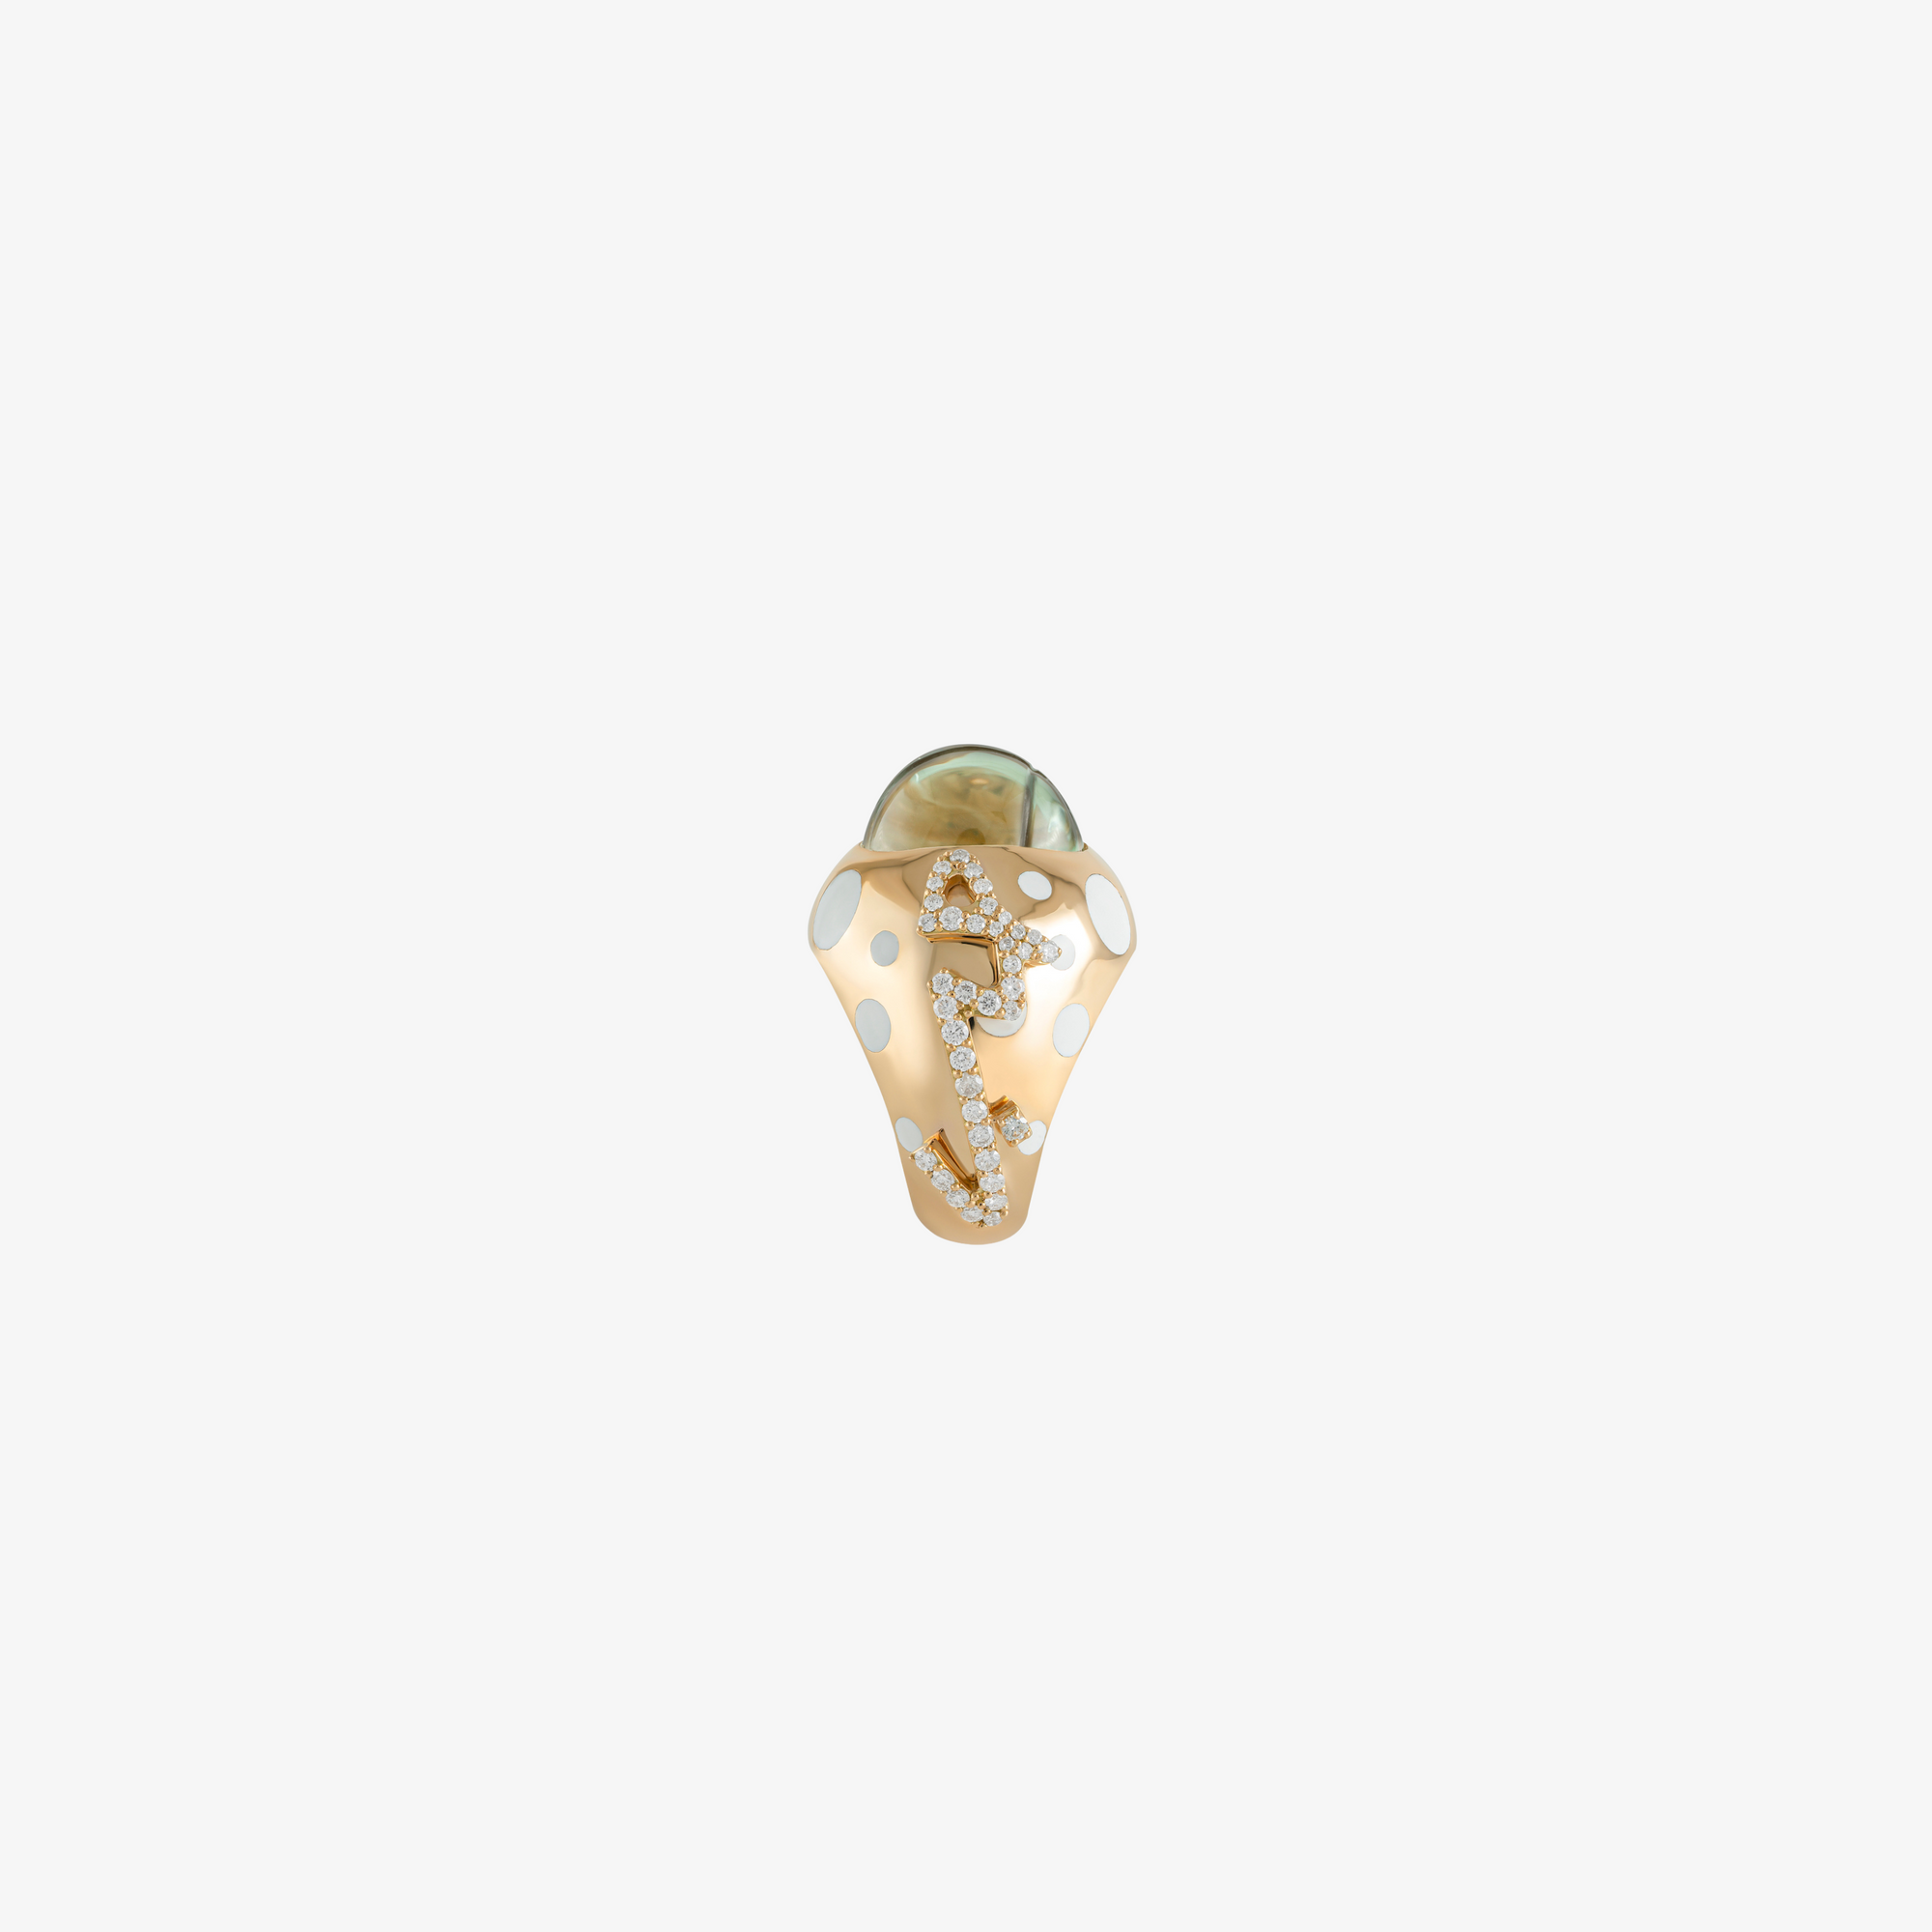 TAIM - Gold, Diamond & Enamel "Love" Ring